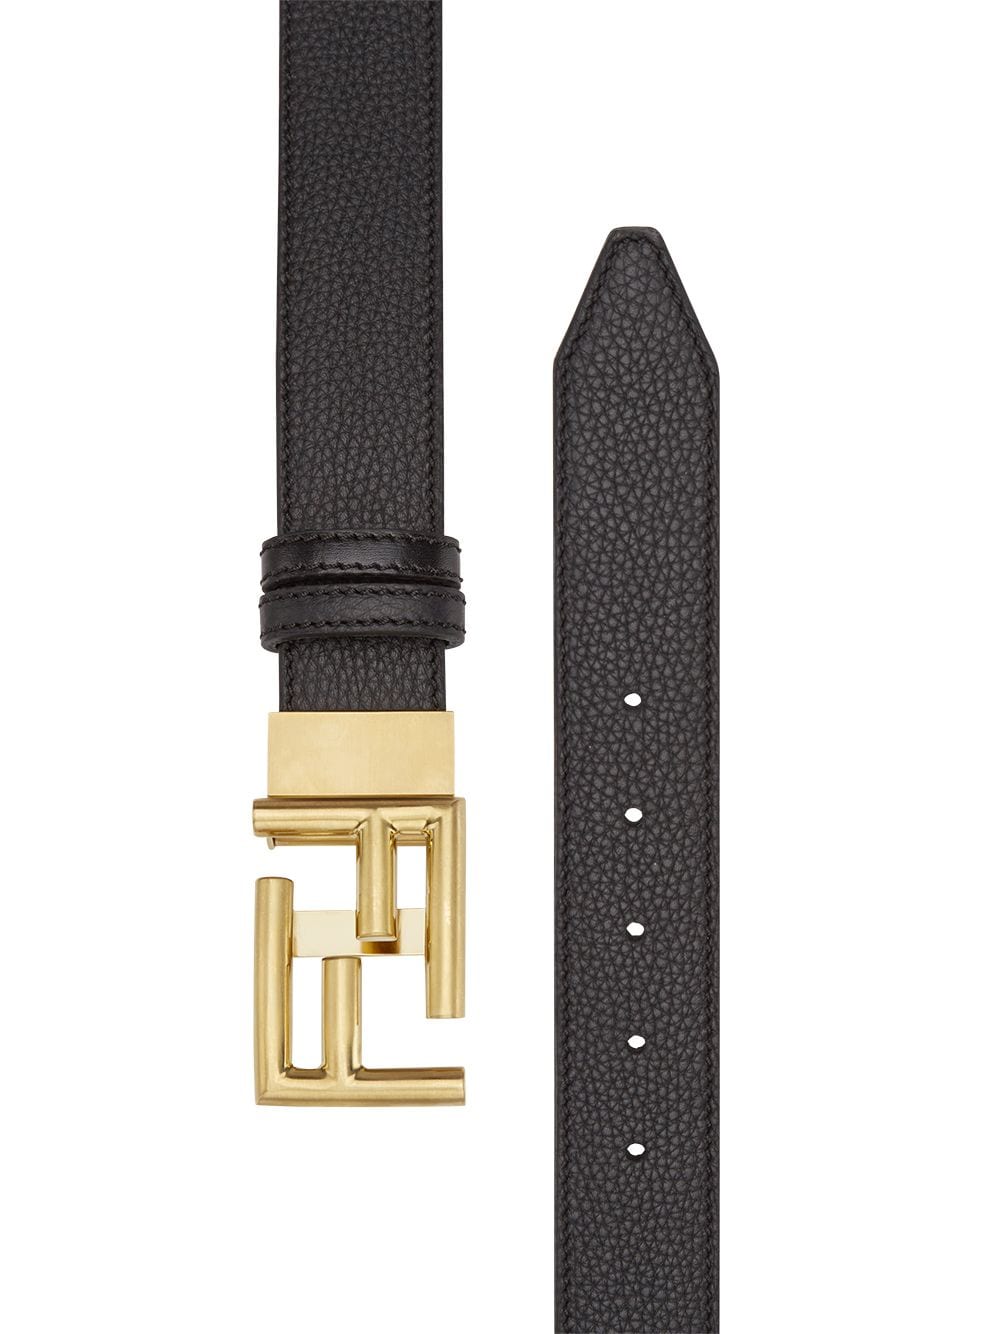 FF Gold Plaque Leather Belt